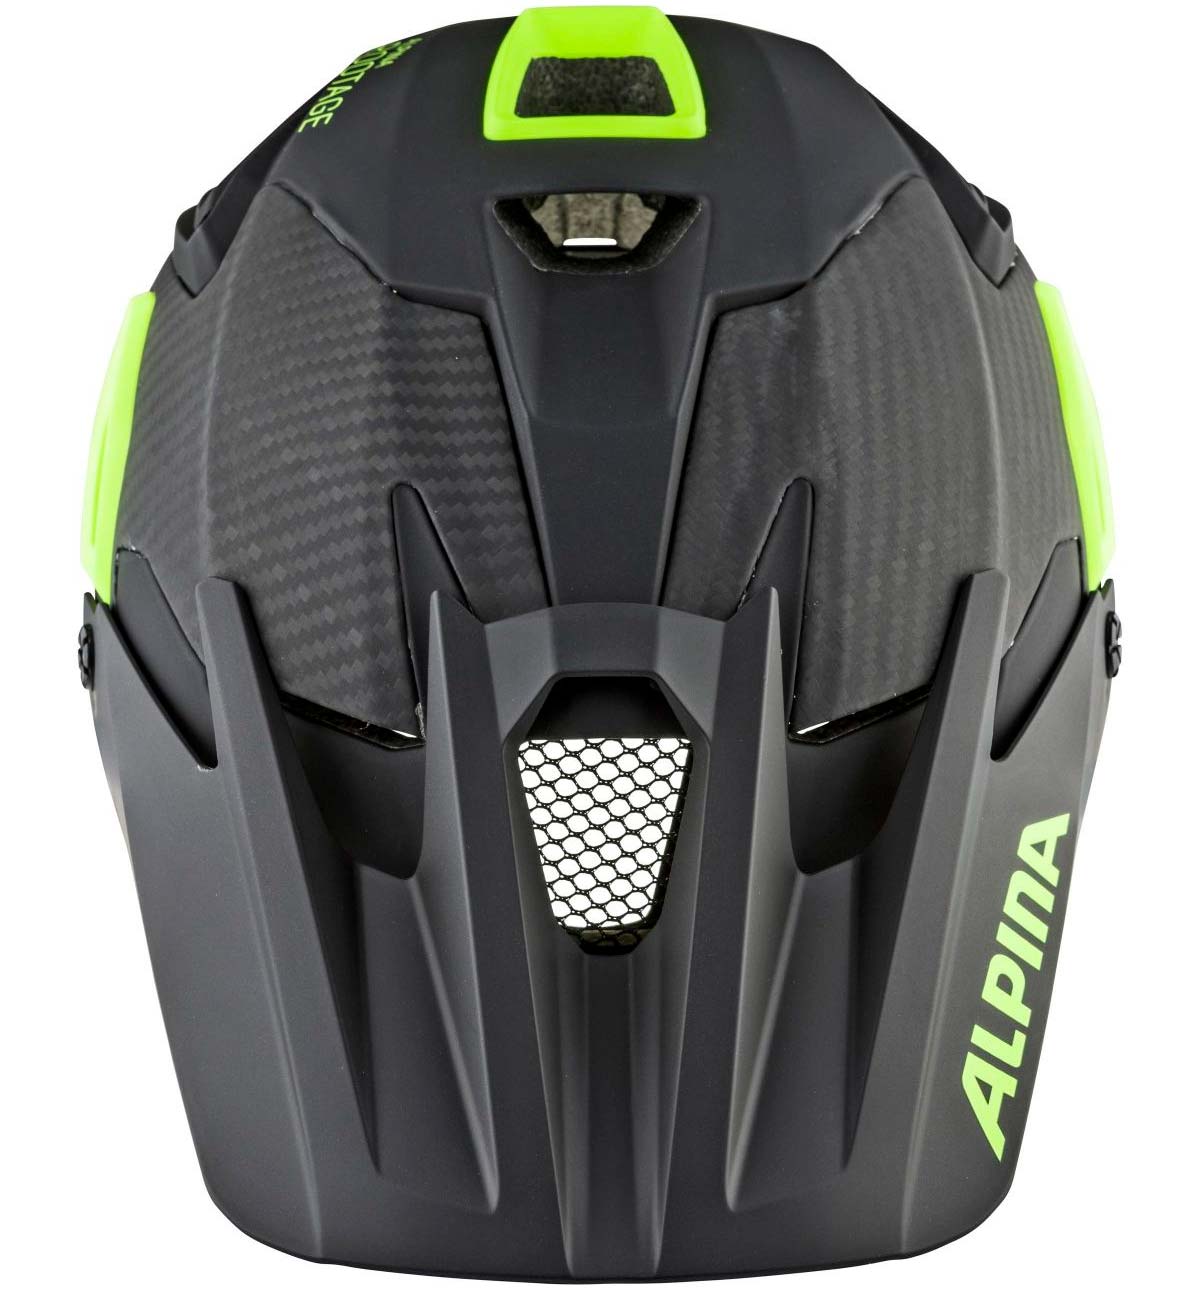 En TodoMountainBike: Alpina Rootage, un agresivo casco de Enduro reforzado con placas de carbono